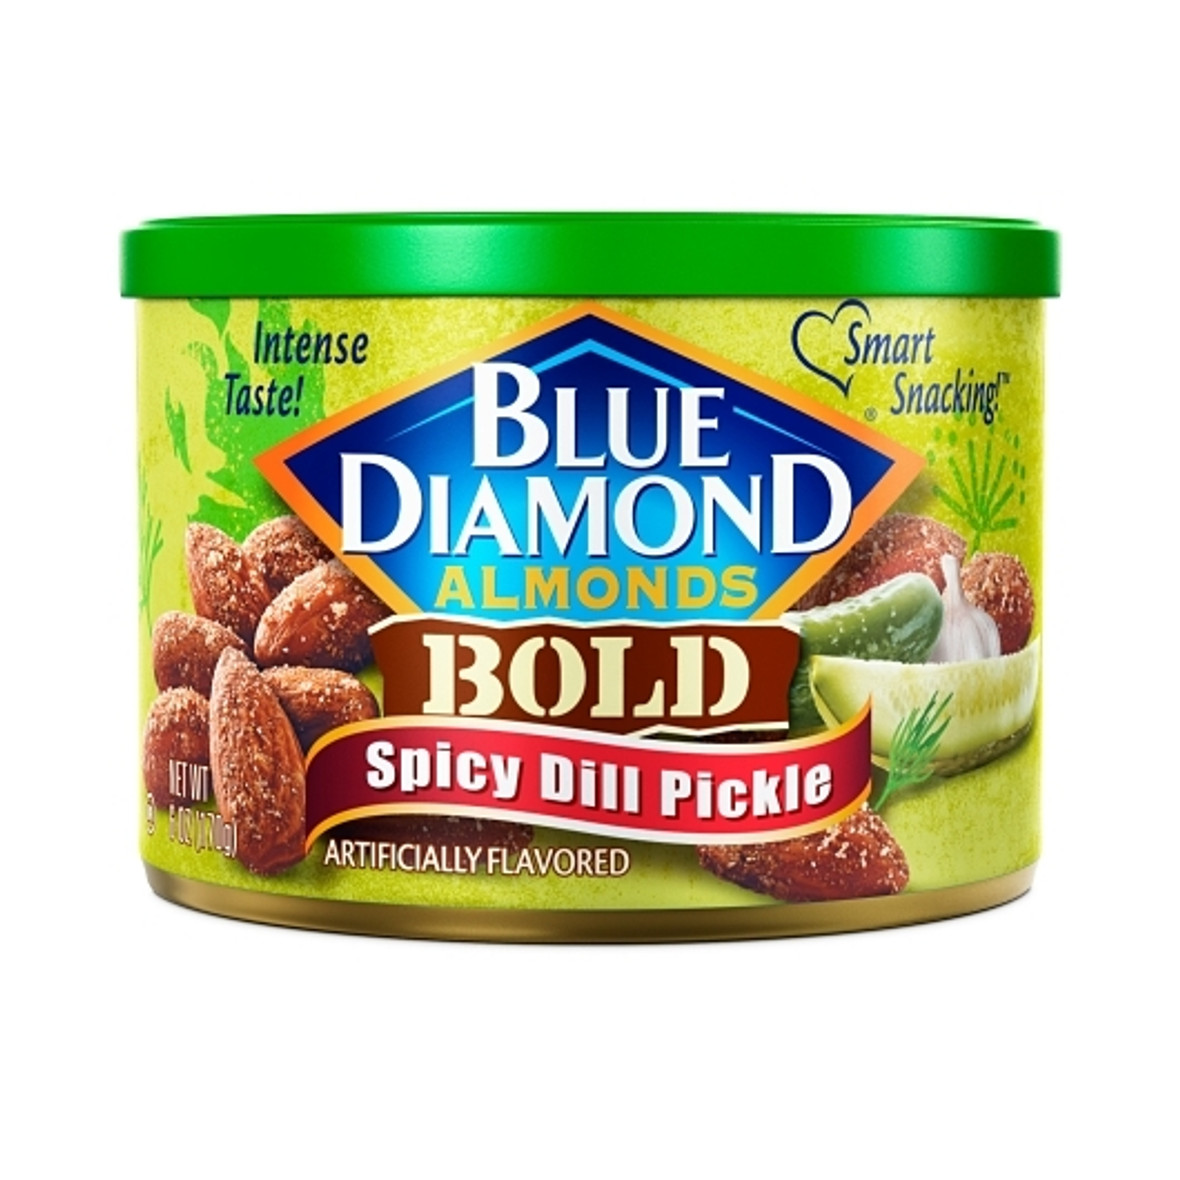 Blue Diamond Almonds Bold Spicy Dill Pickle, 6 Ounce, 12 Per Case